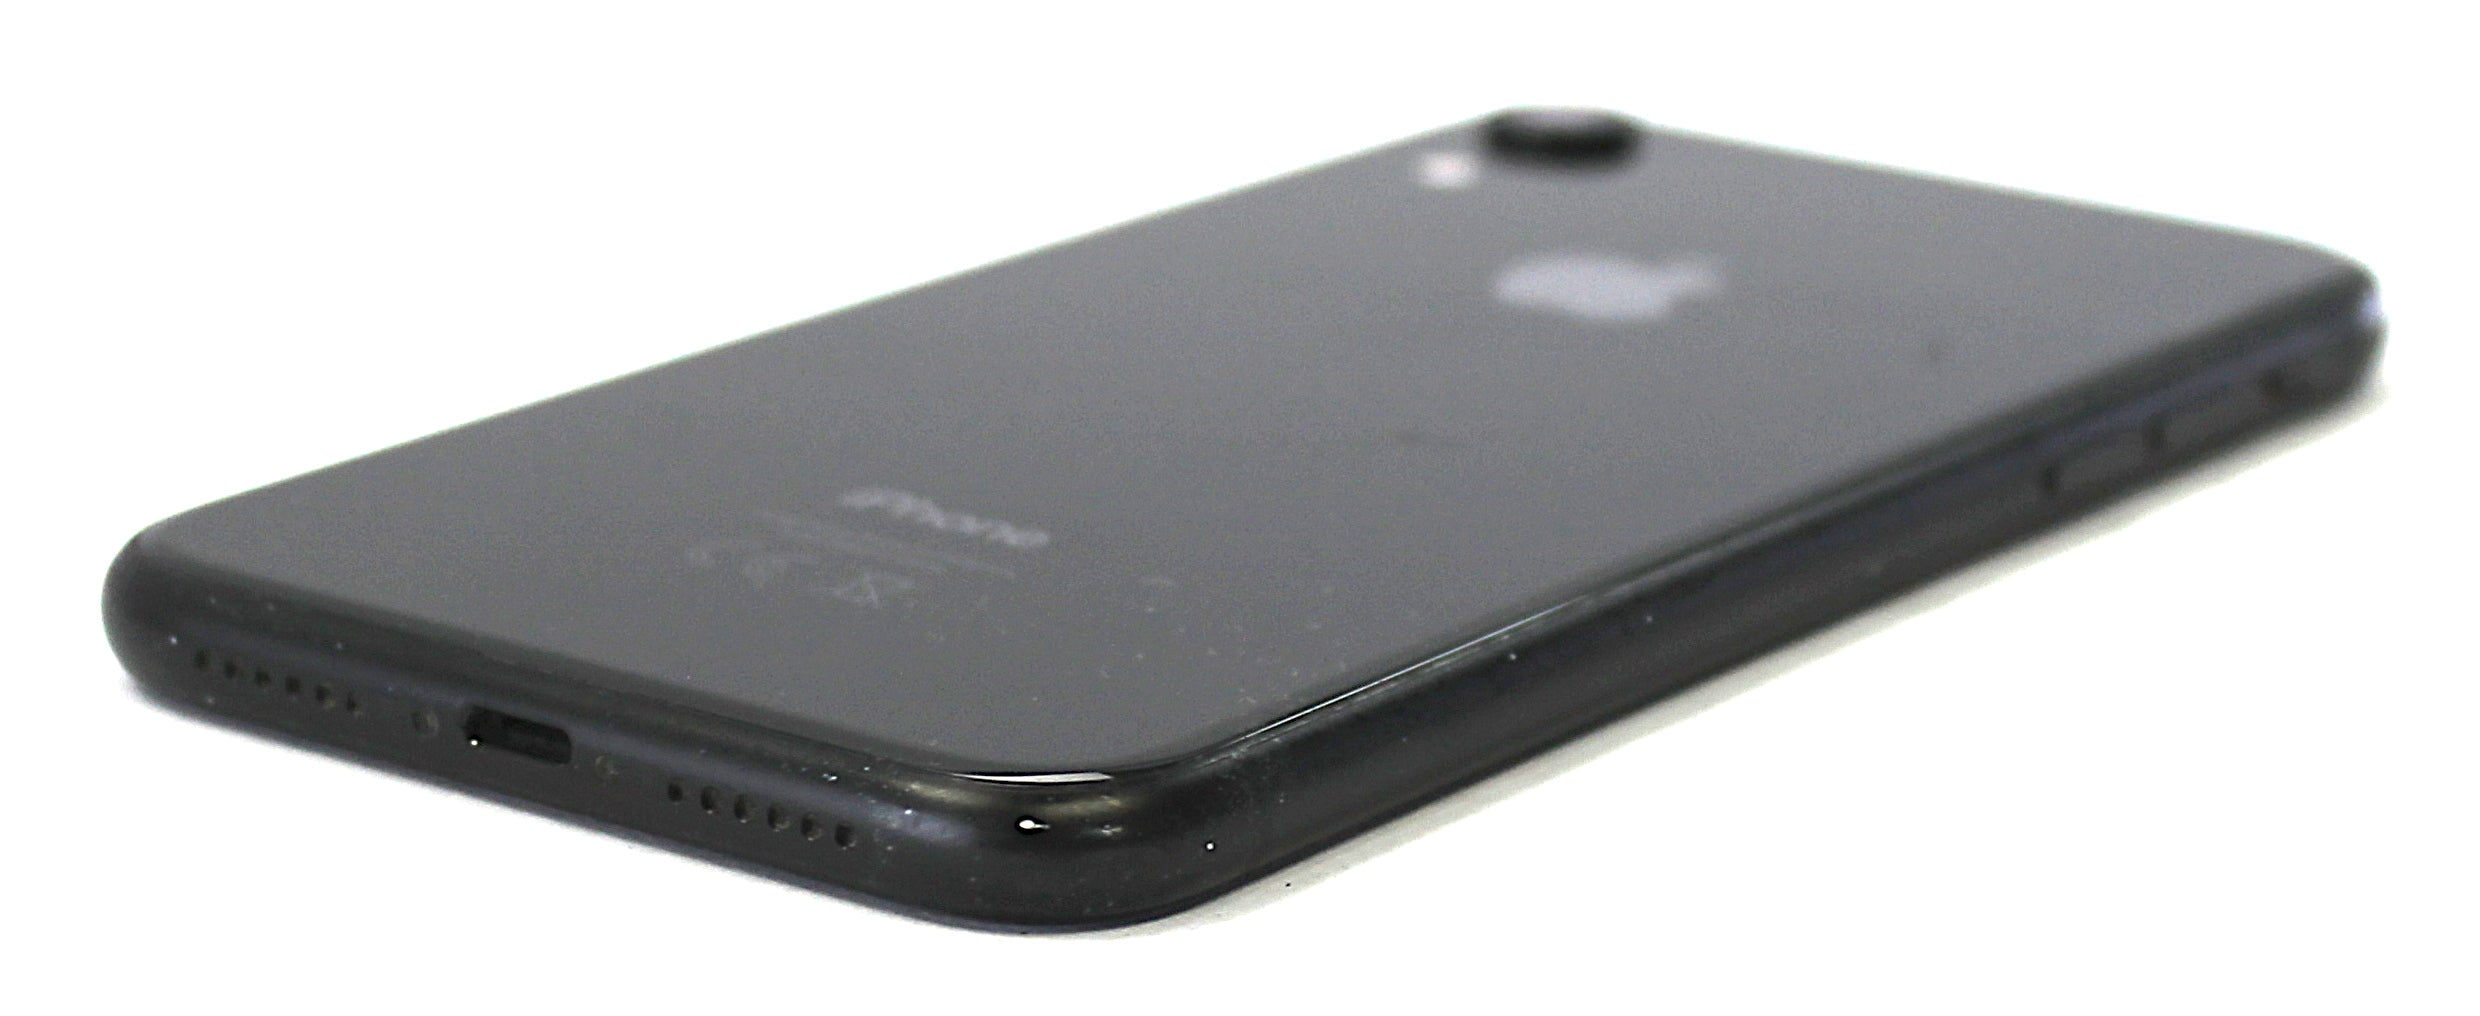 Apple iPhone XR Smartphone, 128GB, Network Unlocked, Black, A2105